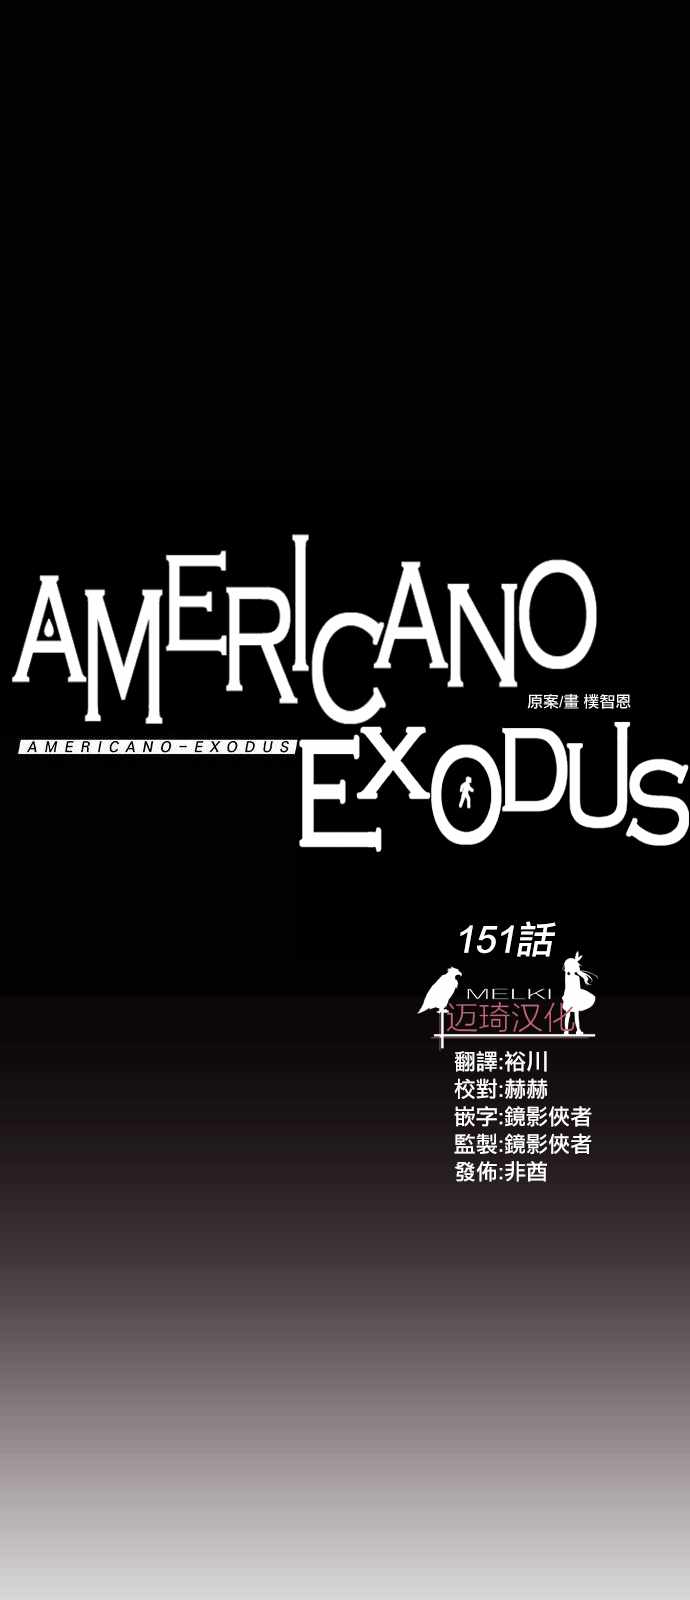 《Americano-exodus》漫画 exodus 151集